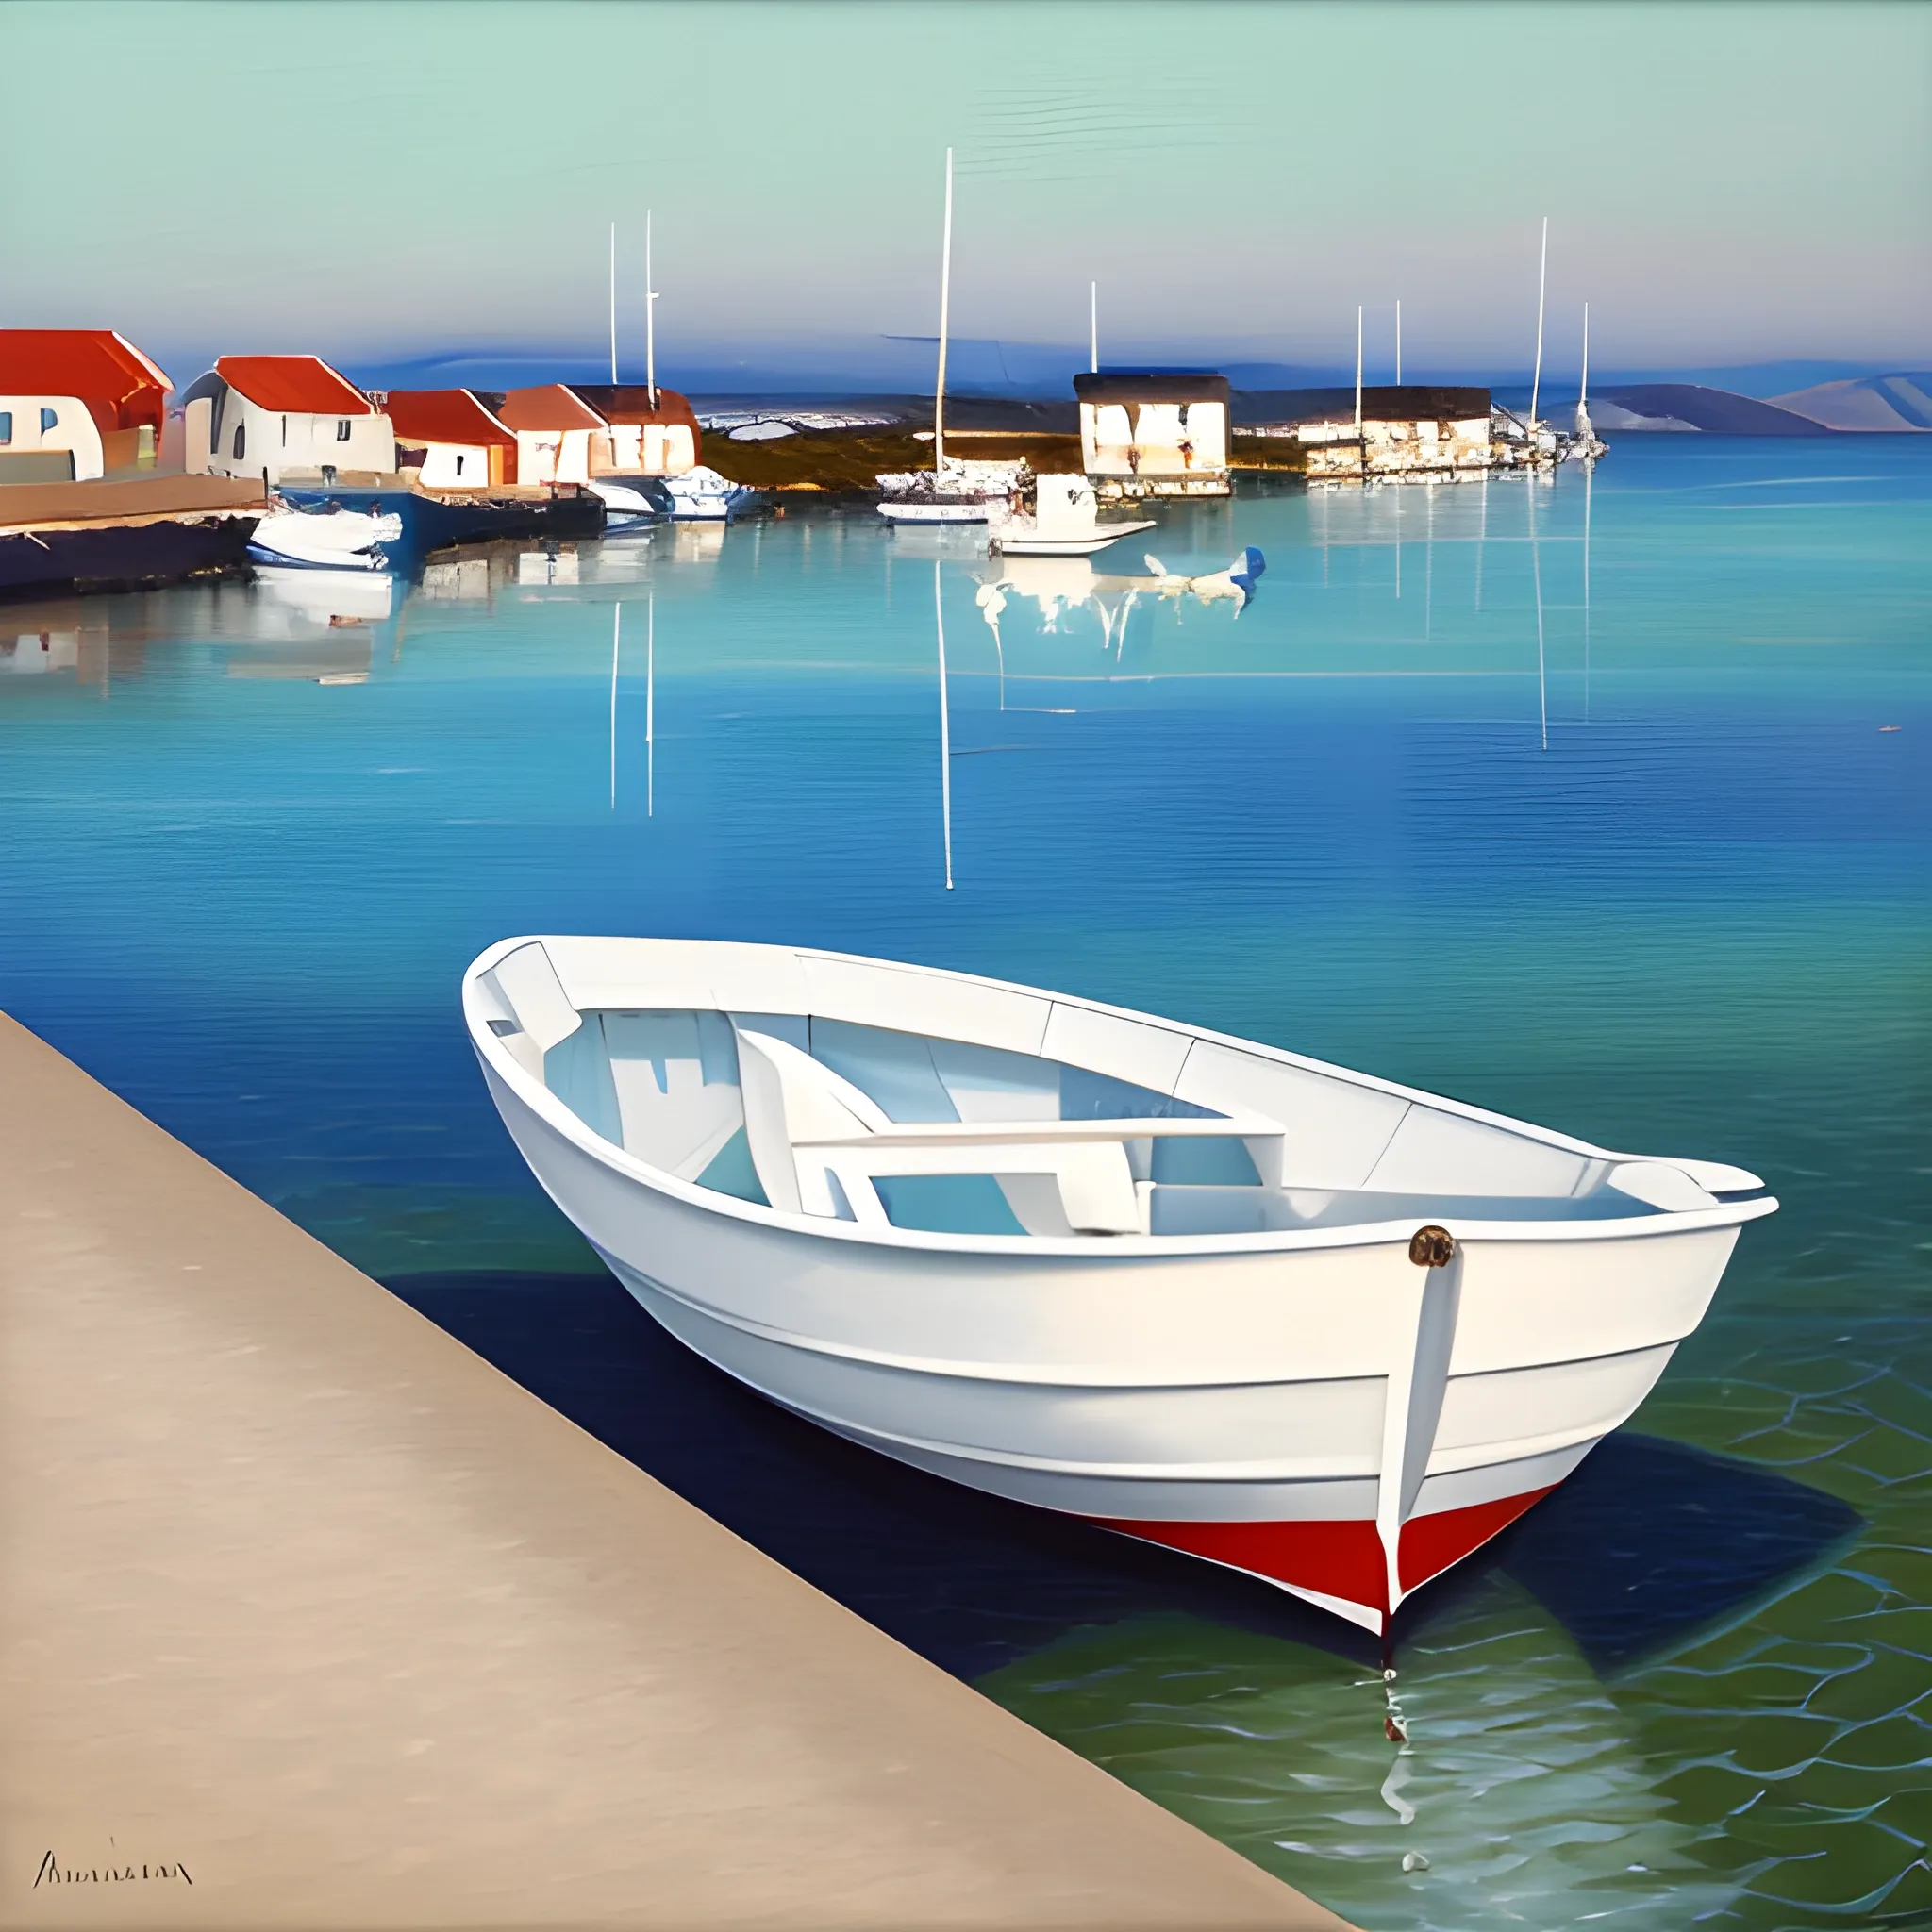 marina, one boat, reflections, horizon, shore, white houses, fisherman, in the distance, anna masana
, Oil Painting